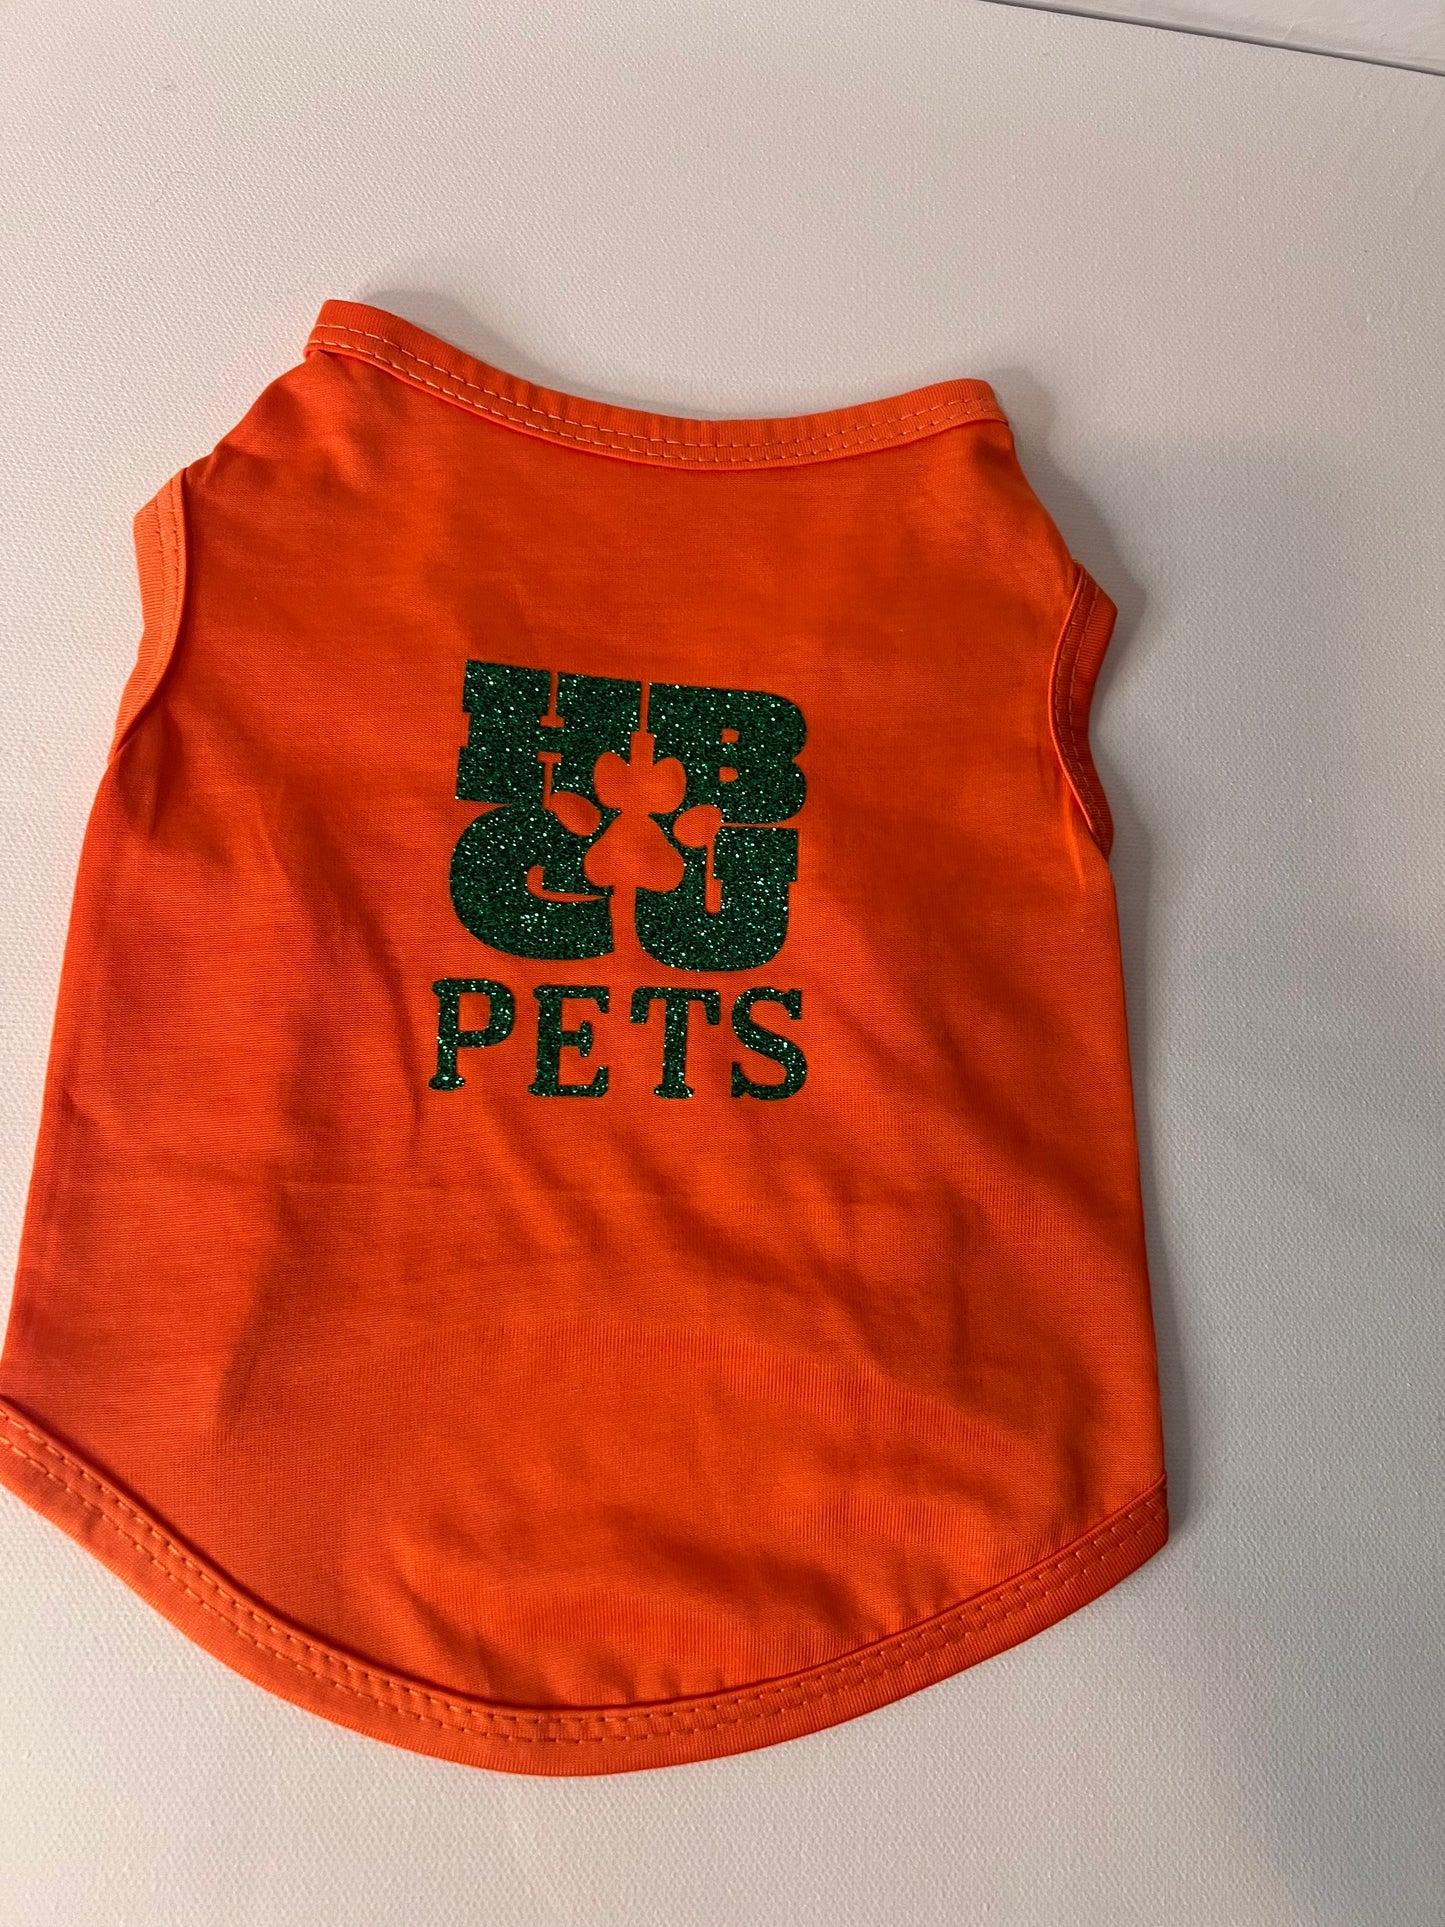 HBCU Colorway Pet t-shirt-Orange & Green